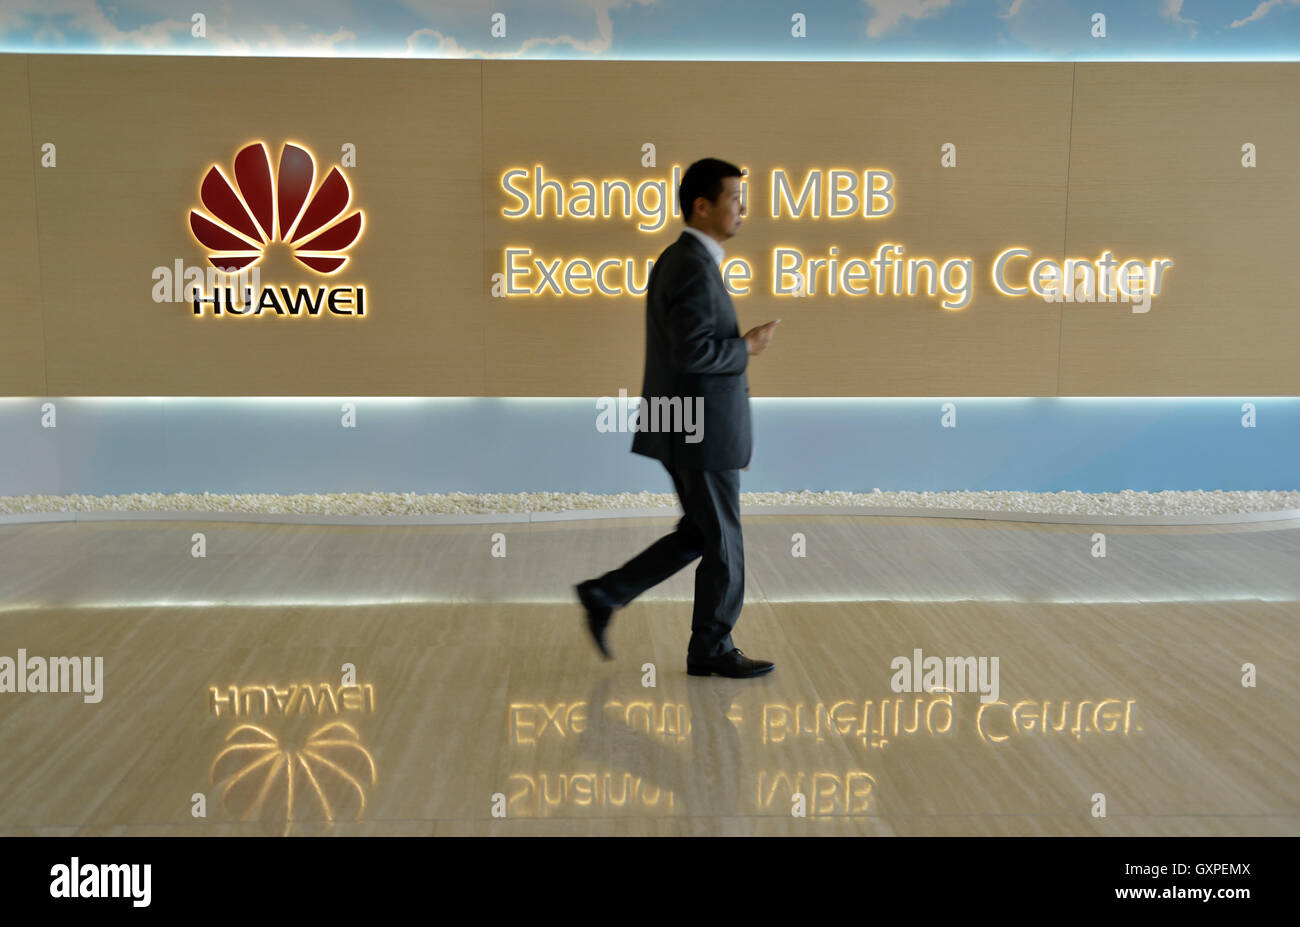 Huawei Shanghai MBB Executive Briefing Center in Shanghai, China. 10-Sep-2016 Stock Photo